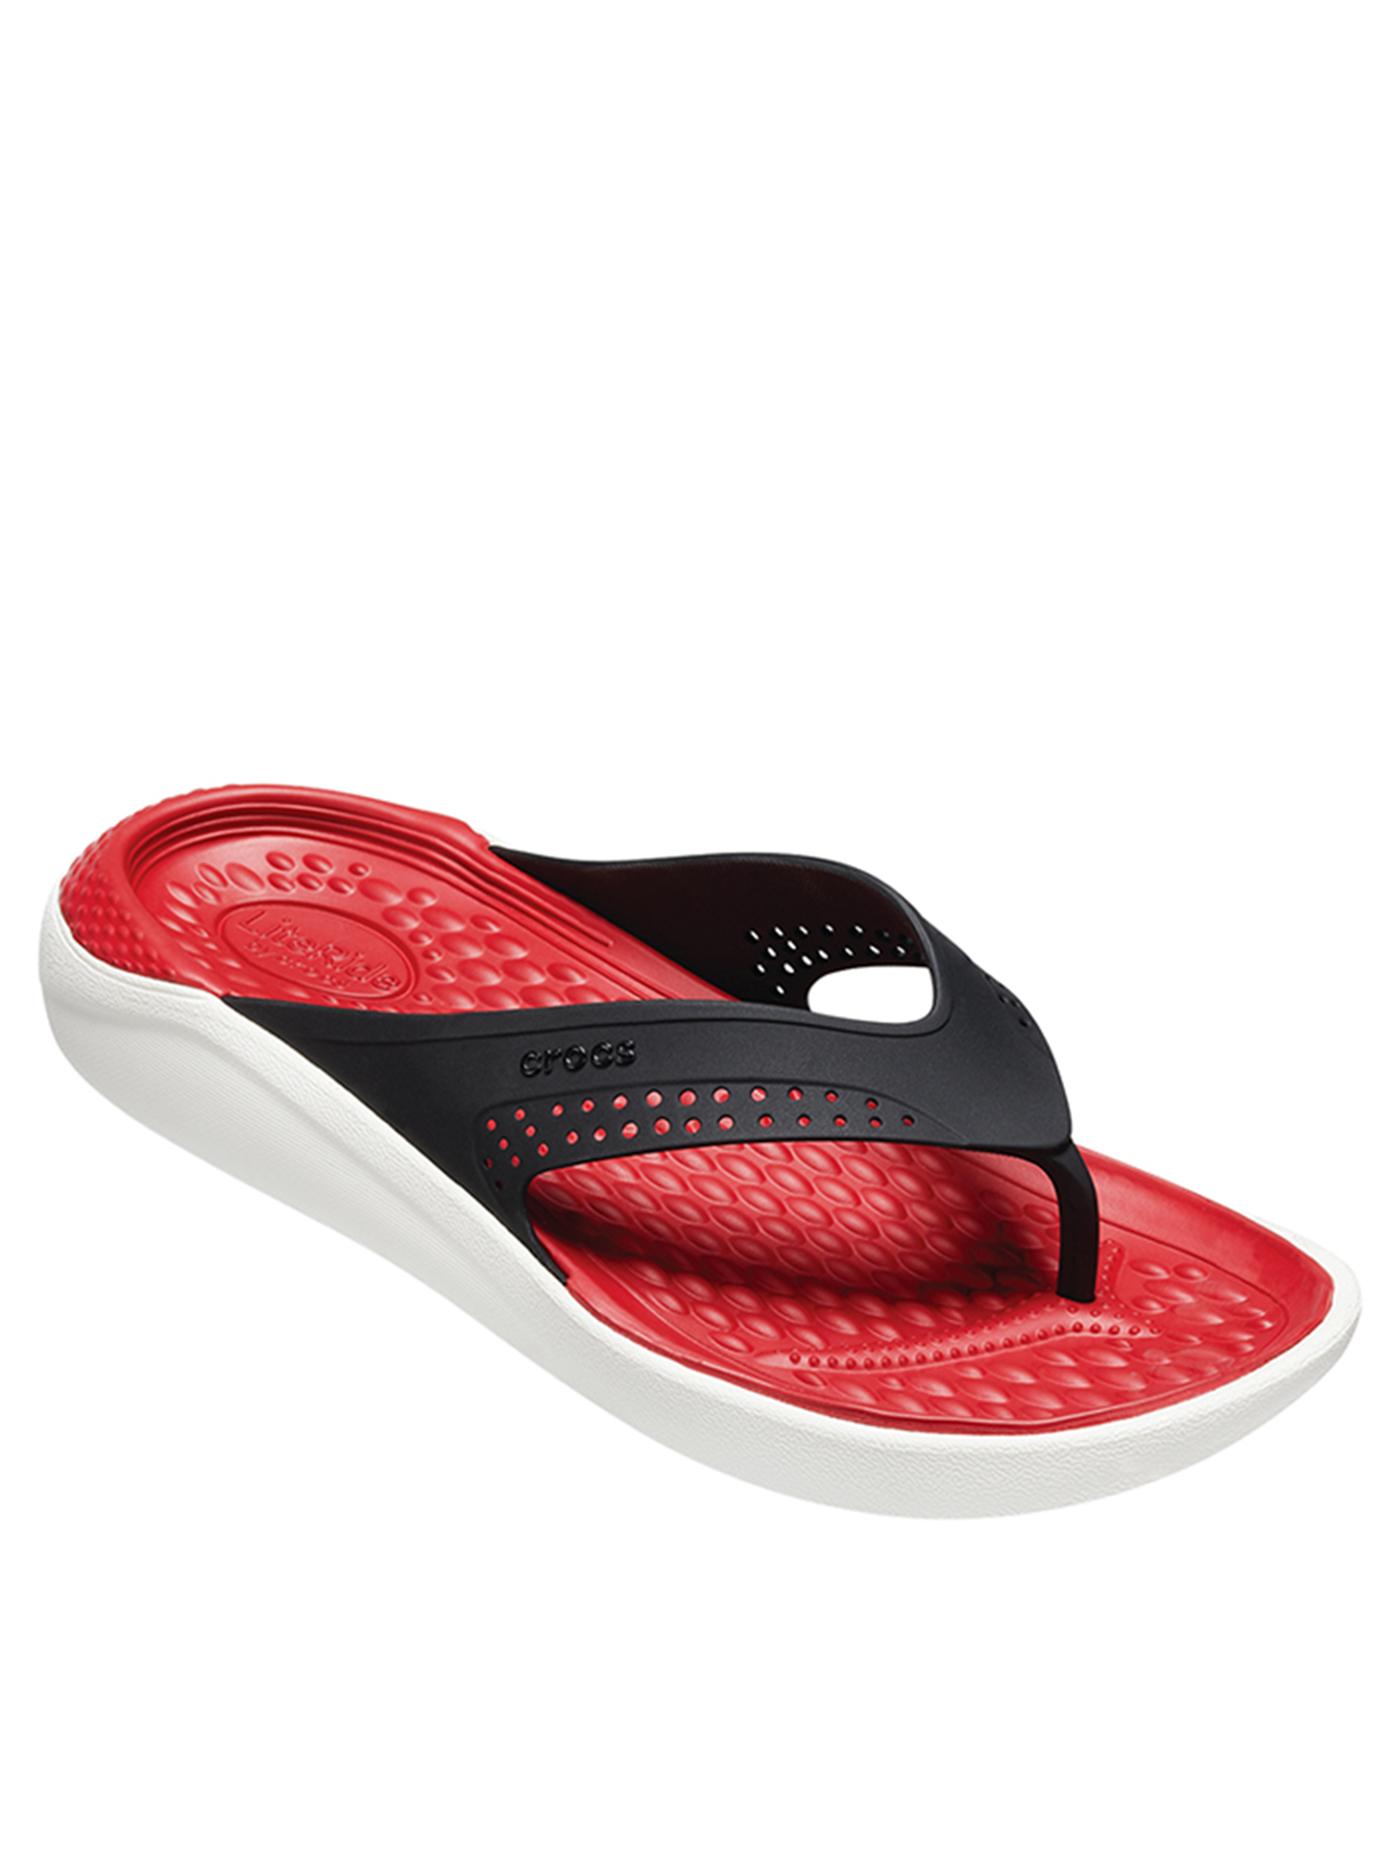 CROCS รองเท้าแตะสำหรับผู้ใหญ่ รุ่น Literide Flip ไซส์ M7/W9 สีแดง-ขาว